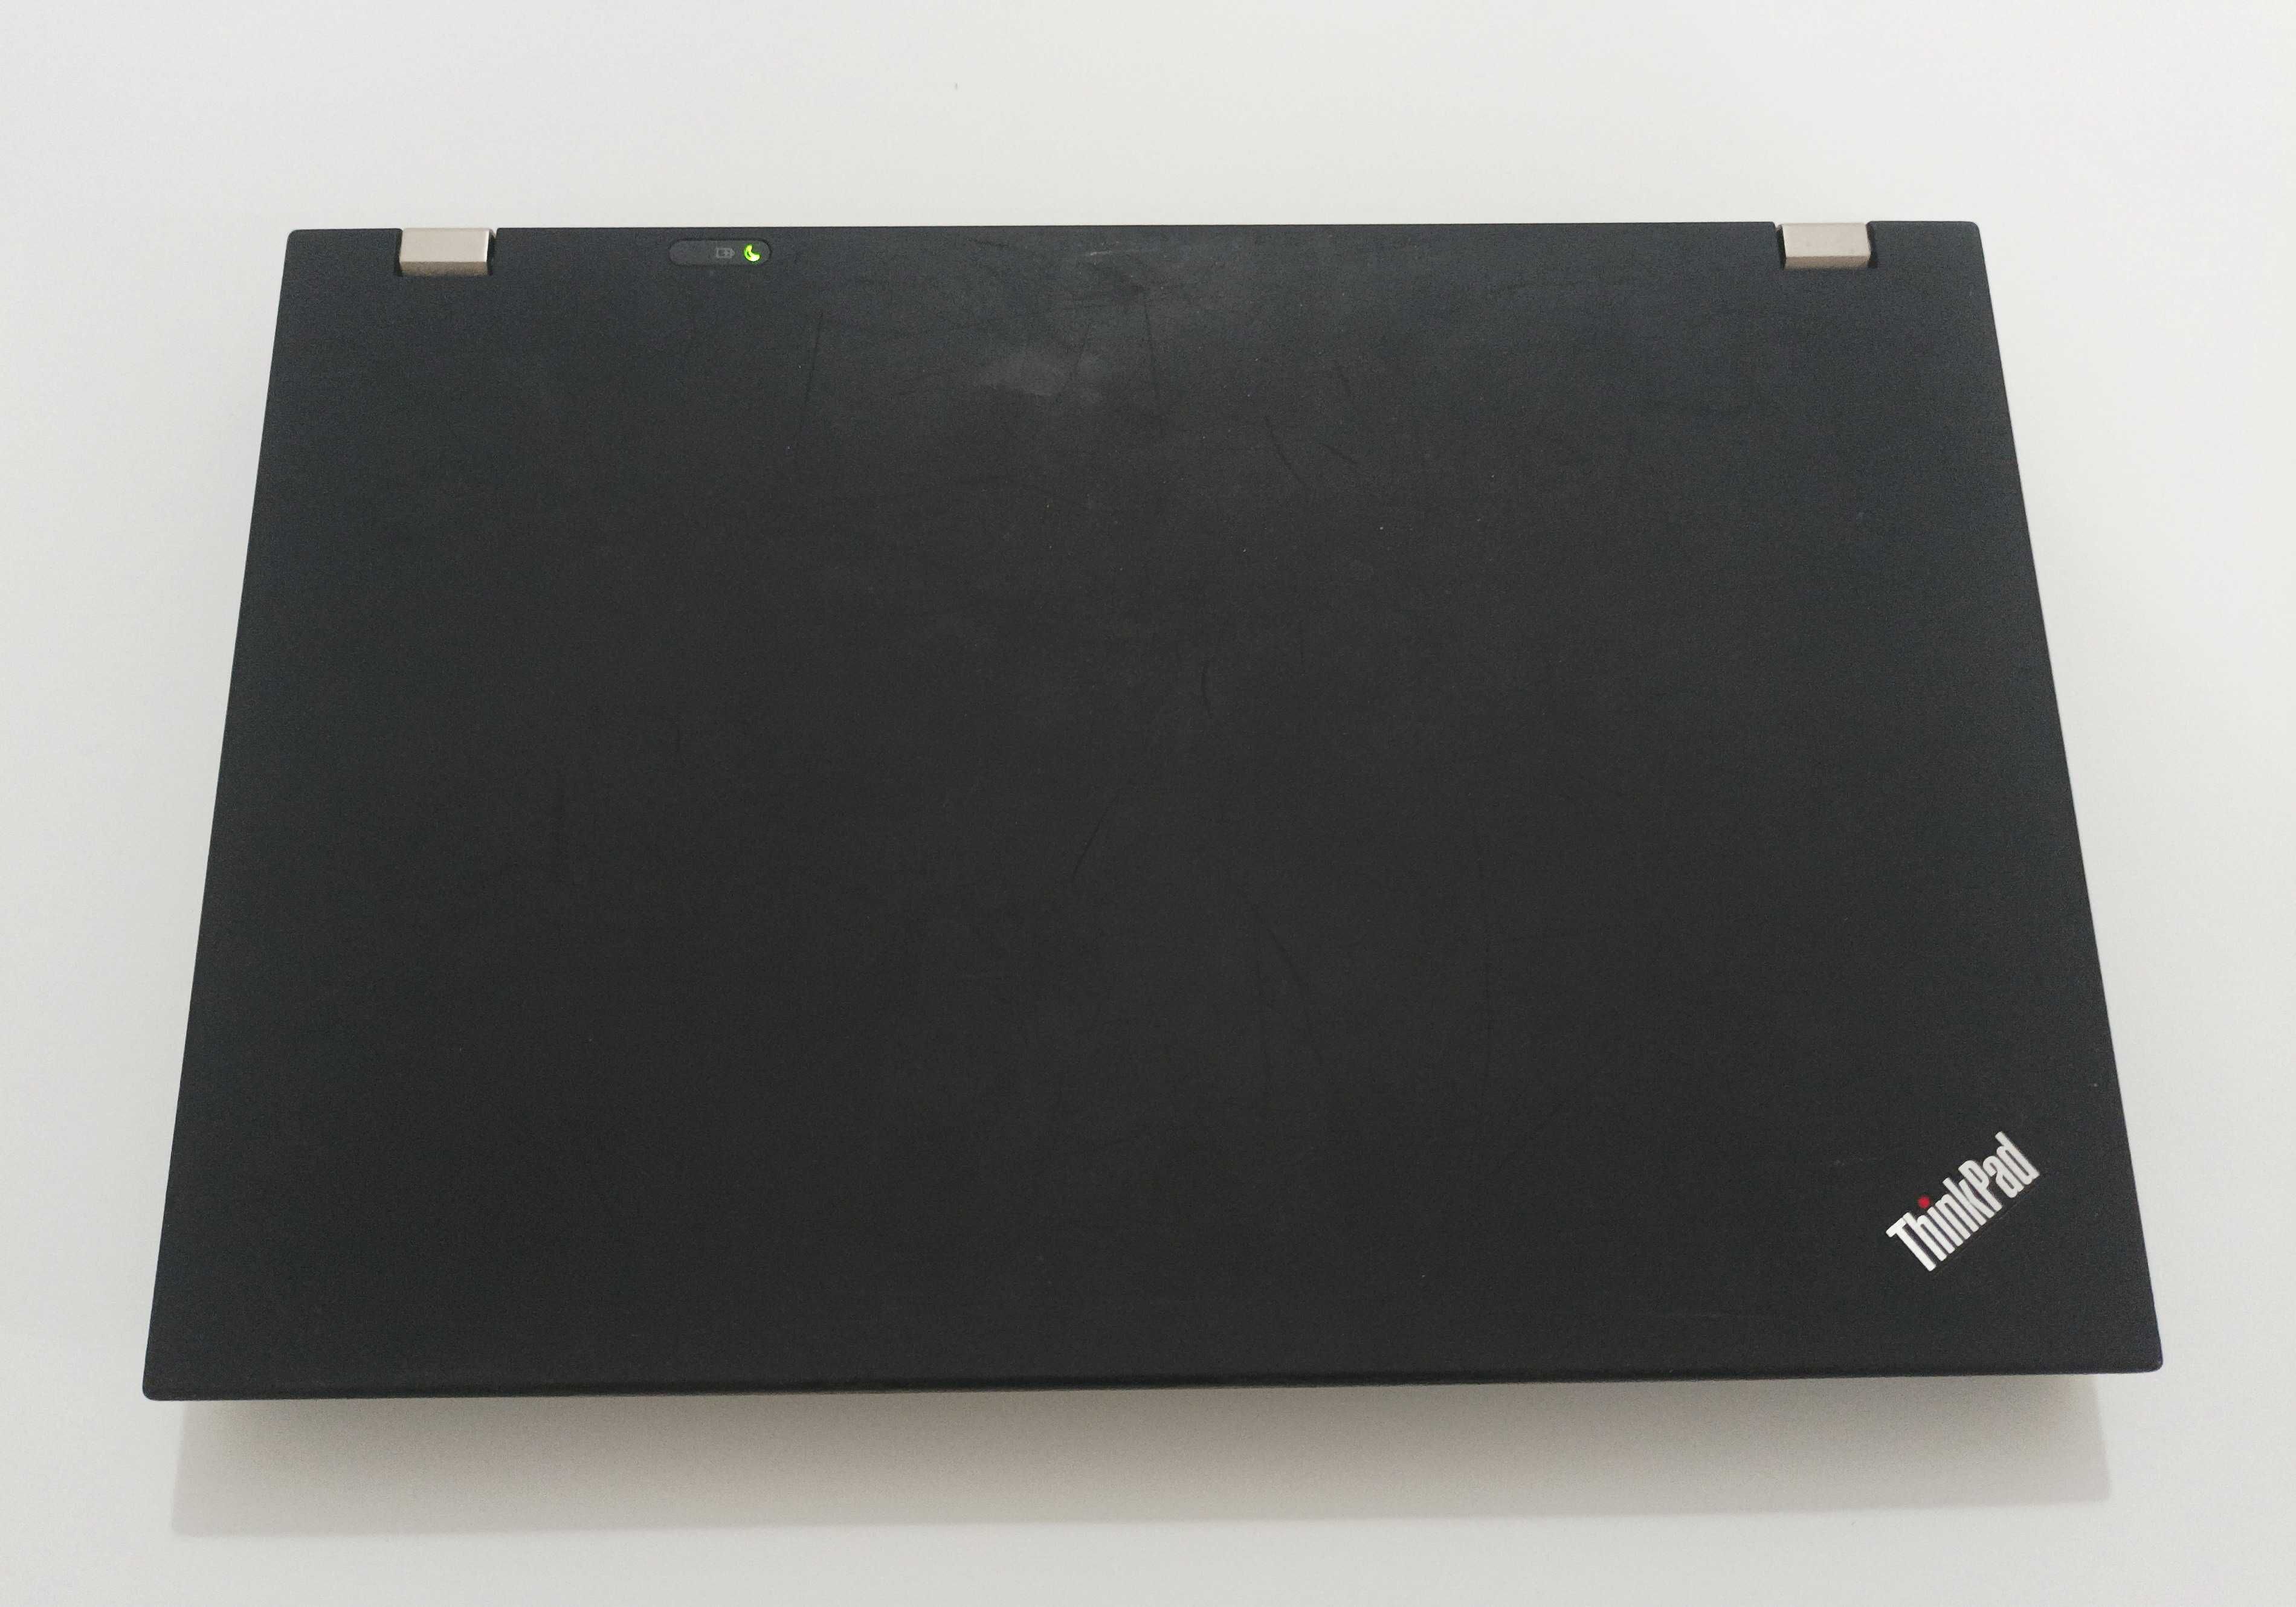 Laptop Lenovo ThinkPad W510, I7 1,6 GHz, nVidia 2GB, Doking Station